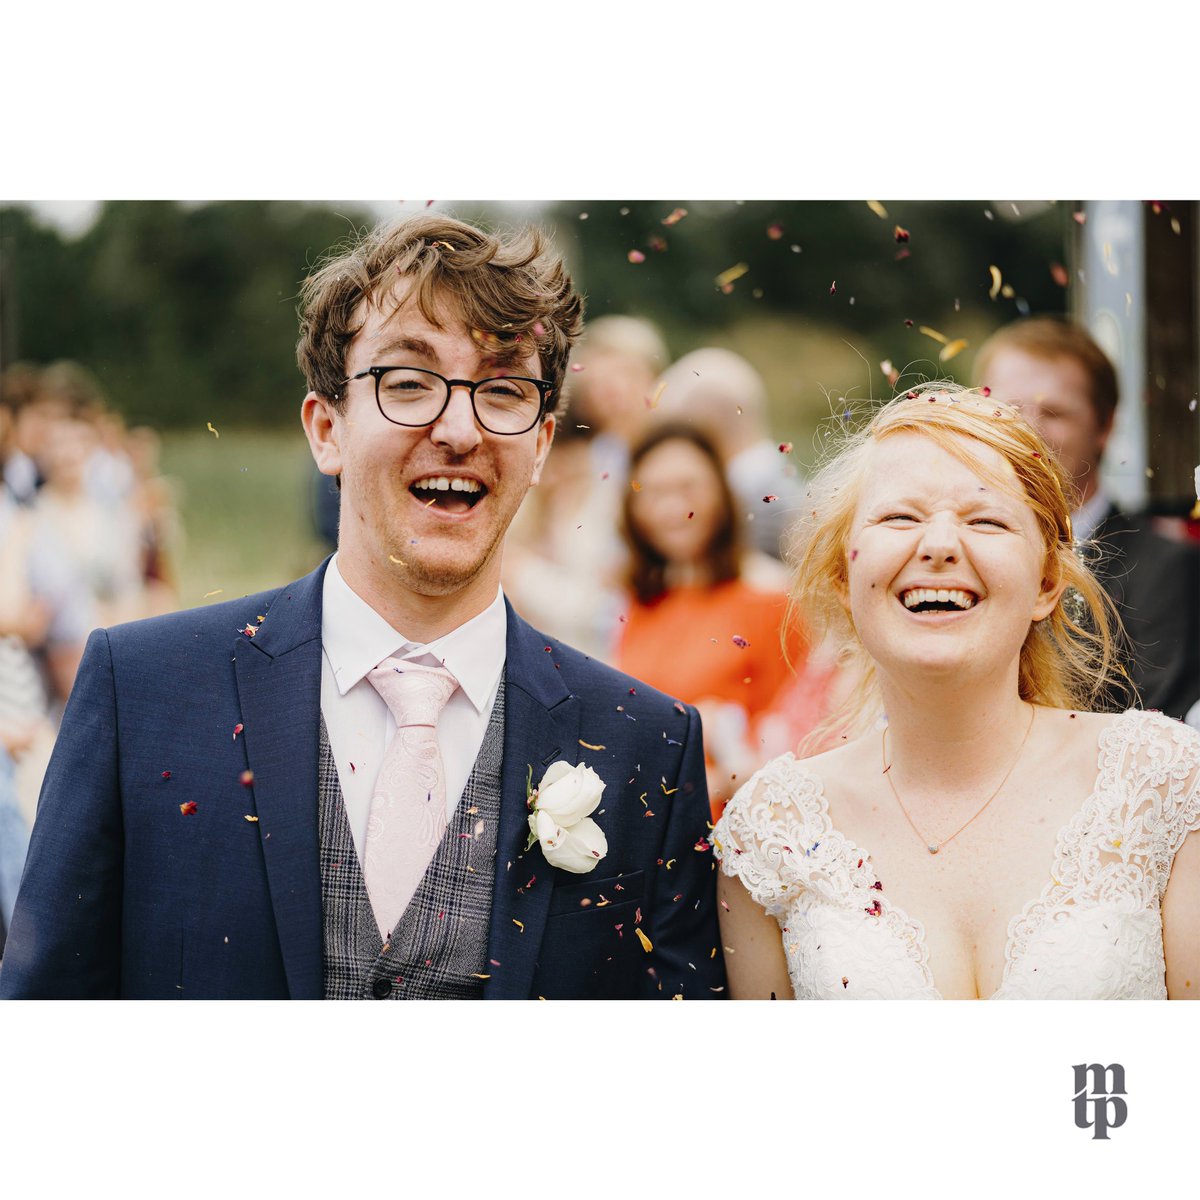 Happy confetti moment for Beth and Matt at Brockholes.

#instabride #instawedding #brockholes #brockholesnaturereserve #brockholesweddings  #lancashirephotographer #weddingphotographerlancashire

michaeltownsend.photography/brockholes-nat…